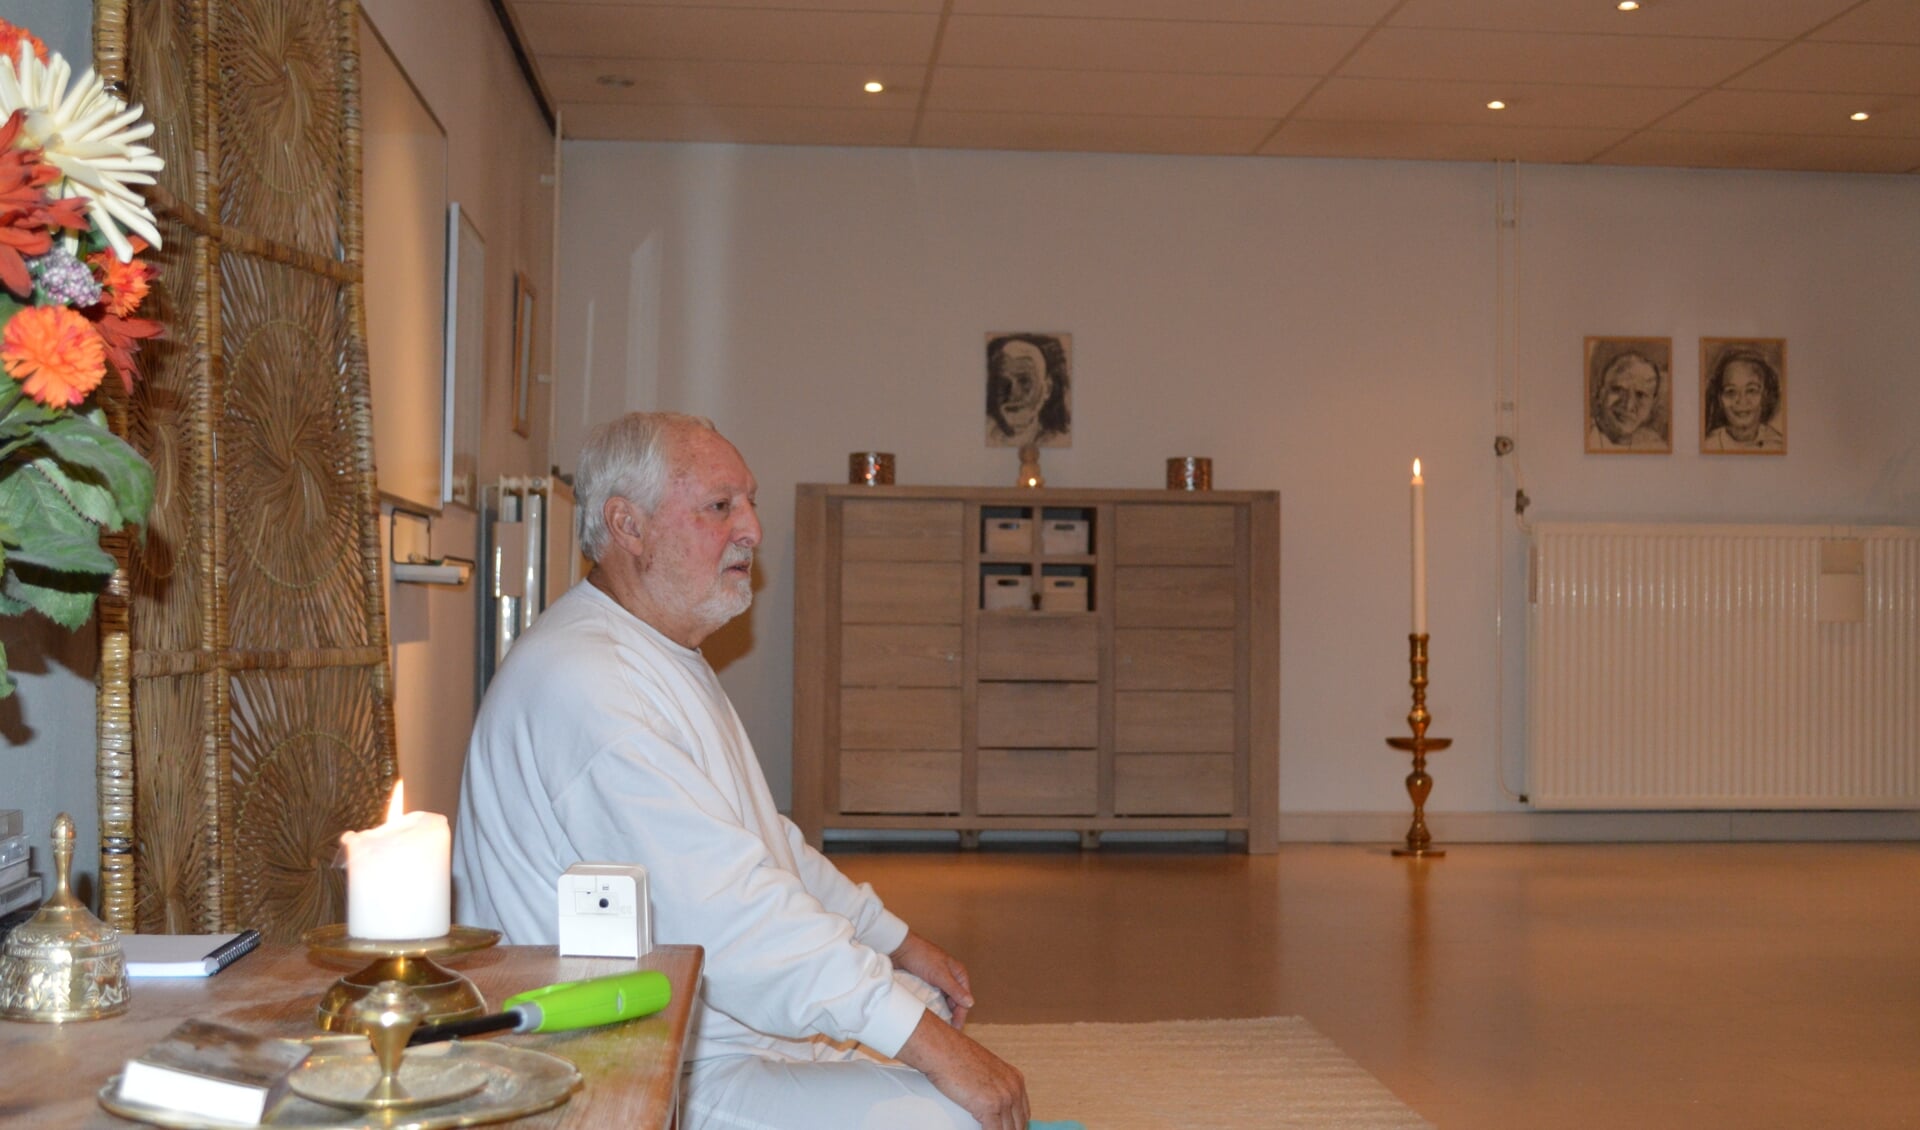 Eigenaar Jan Th. van Opzeeland van Stichting Rãja Yoga 't Gooi.